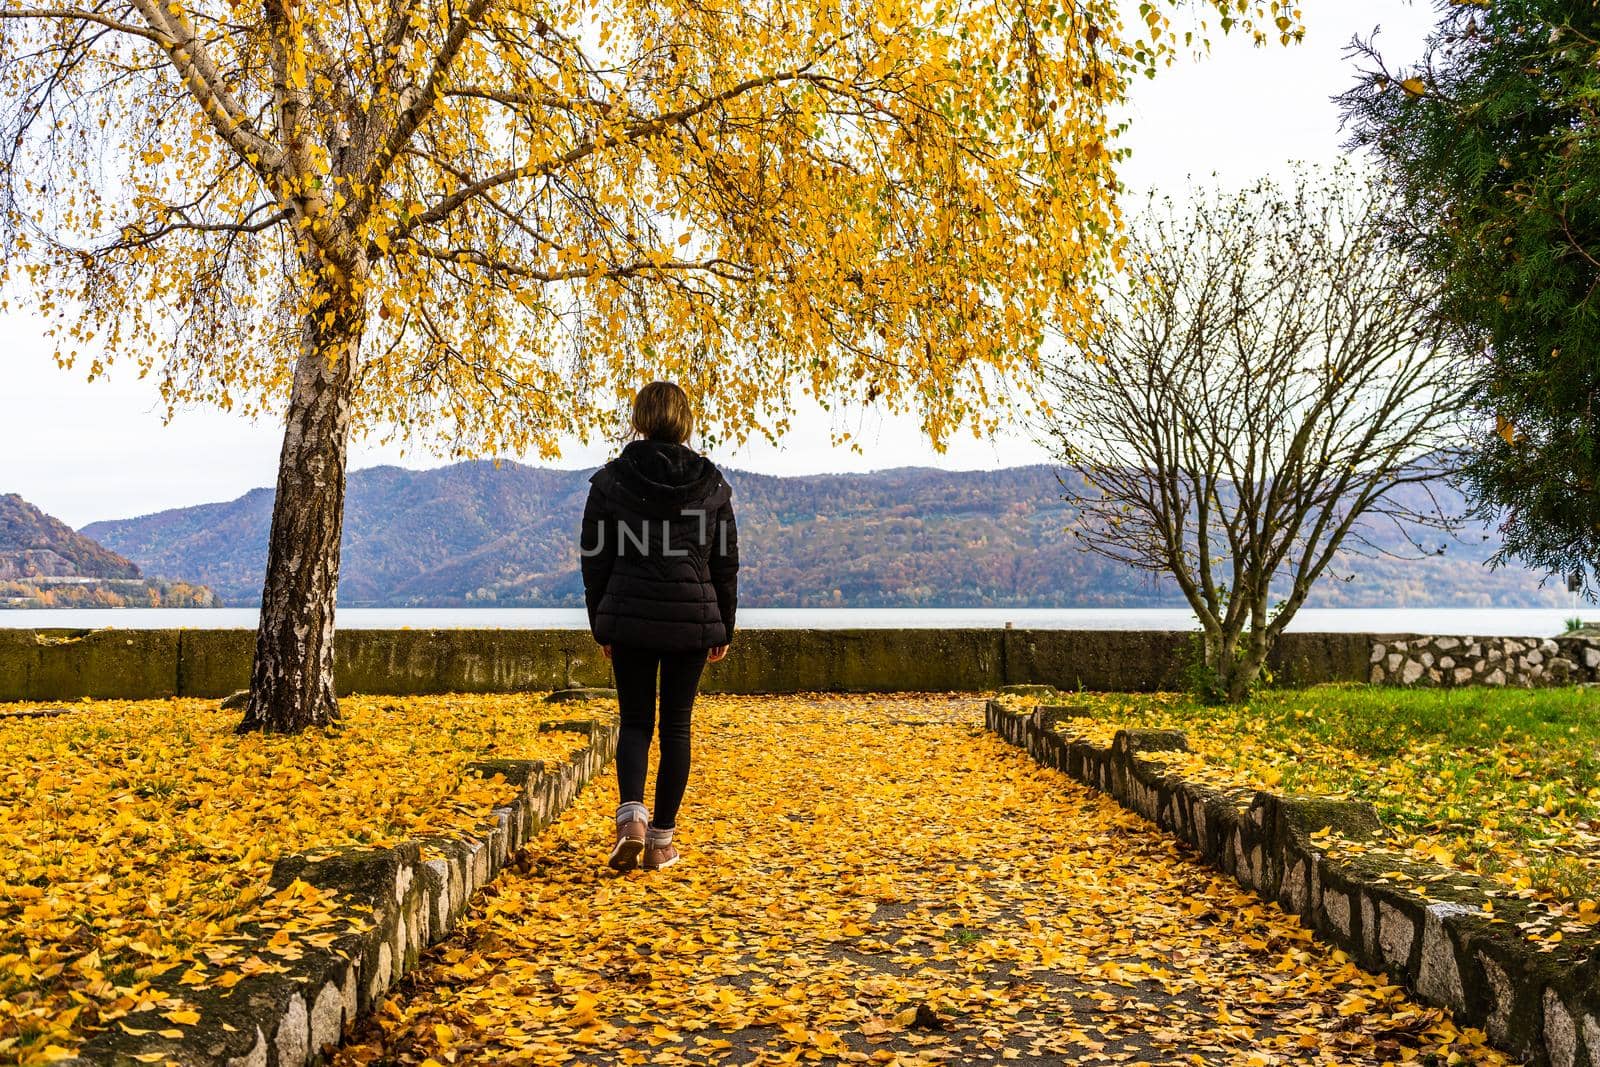  Autumn leaves fallen on alone woman walking on the autumn alley. Autumn landscape, orange foliage in a park in Orsova, Romania, 2020 by vladispas